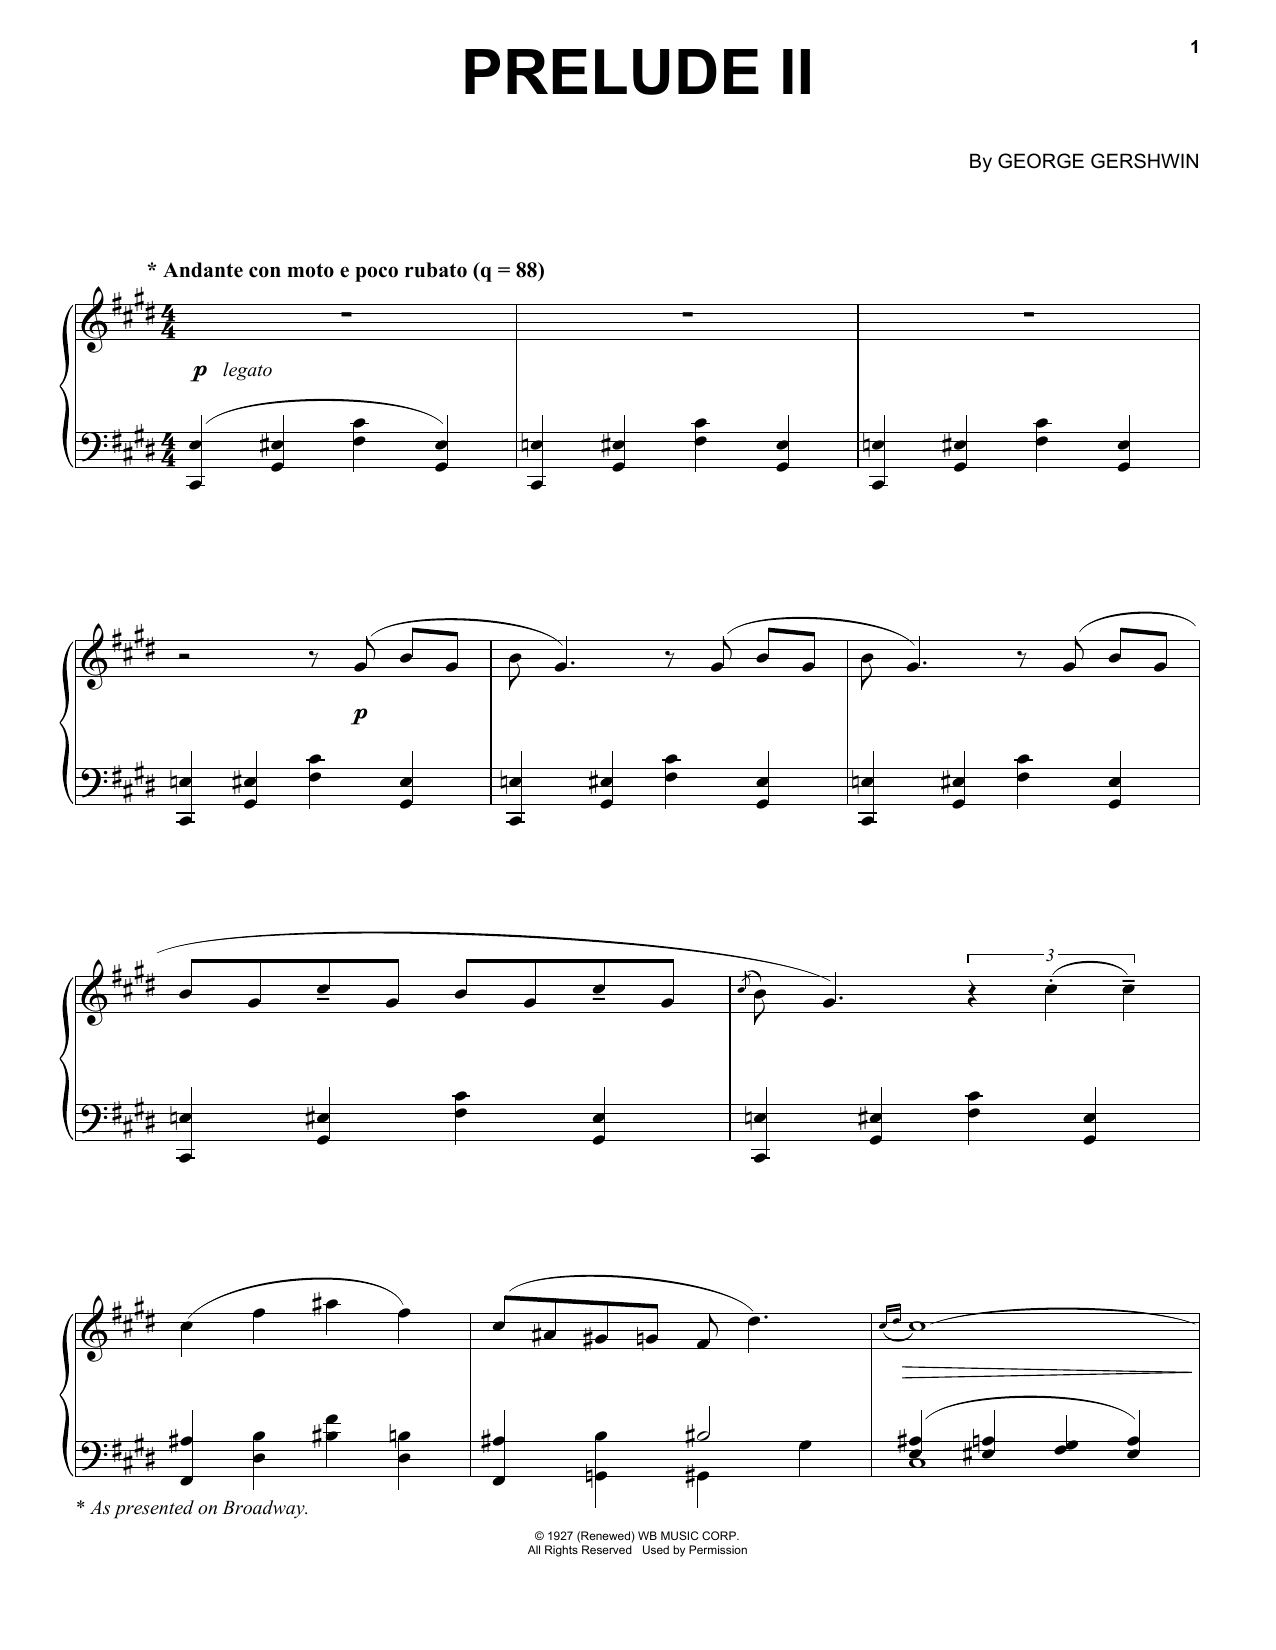 Download George Gershwin Prelude II (Andante Con Moto E Poco Rubato) Sheet Music and learn how to play Piano PDF digital score in minutes